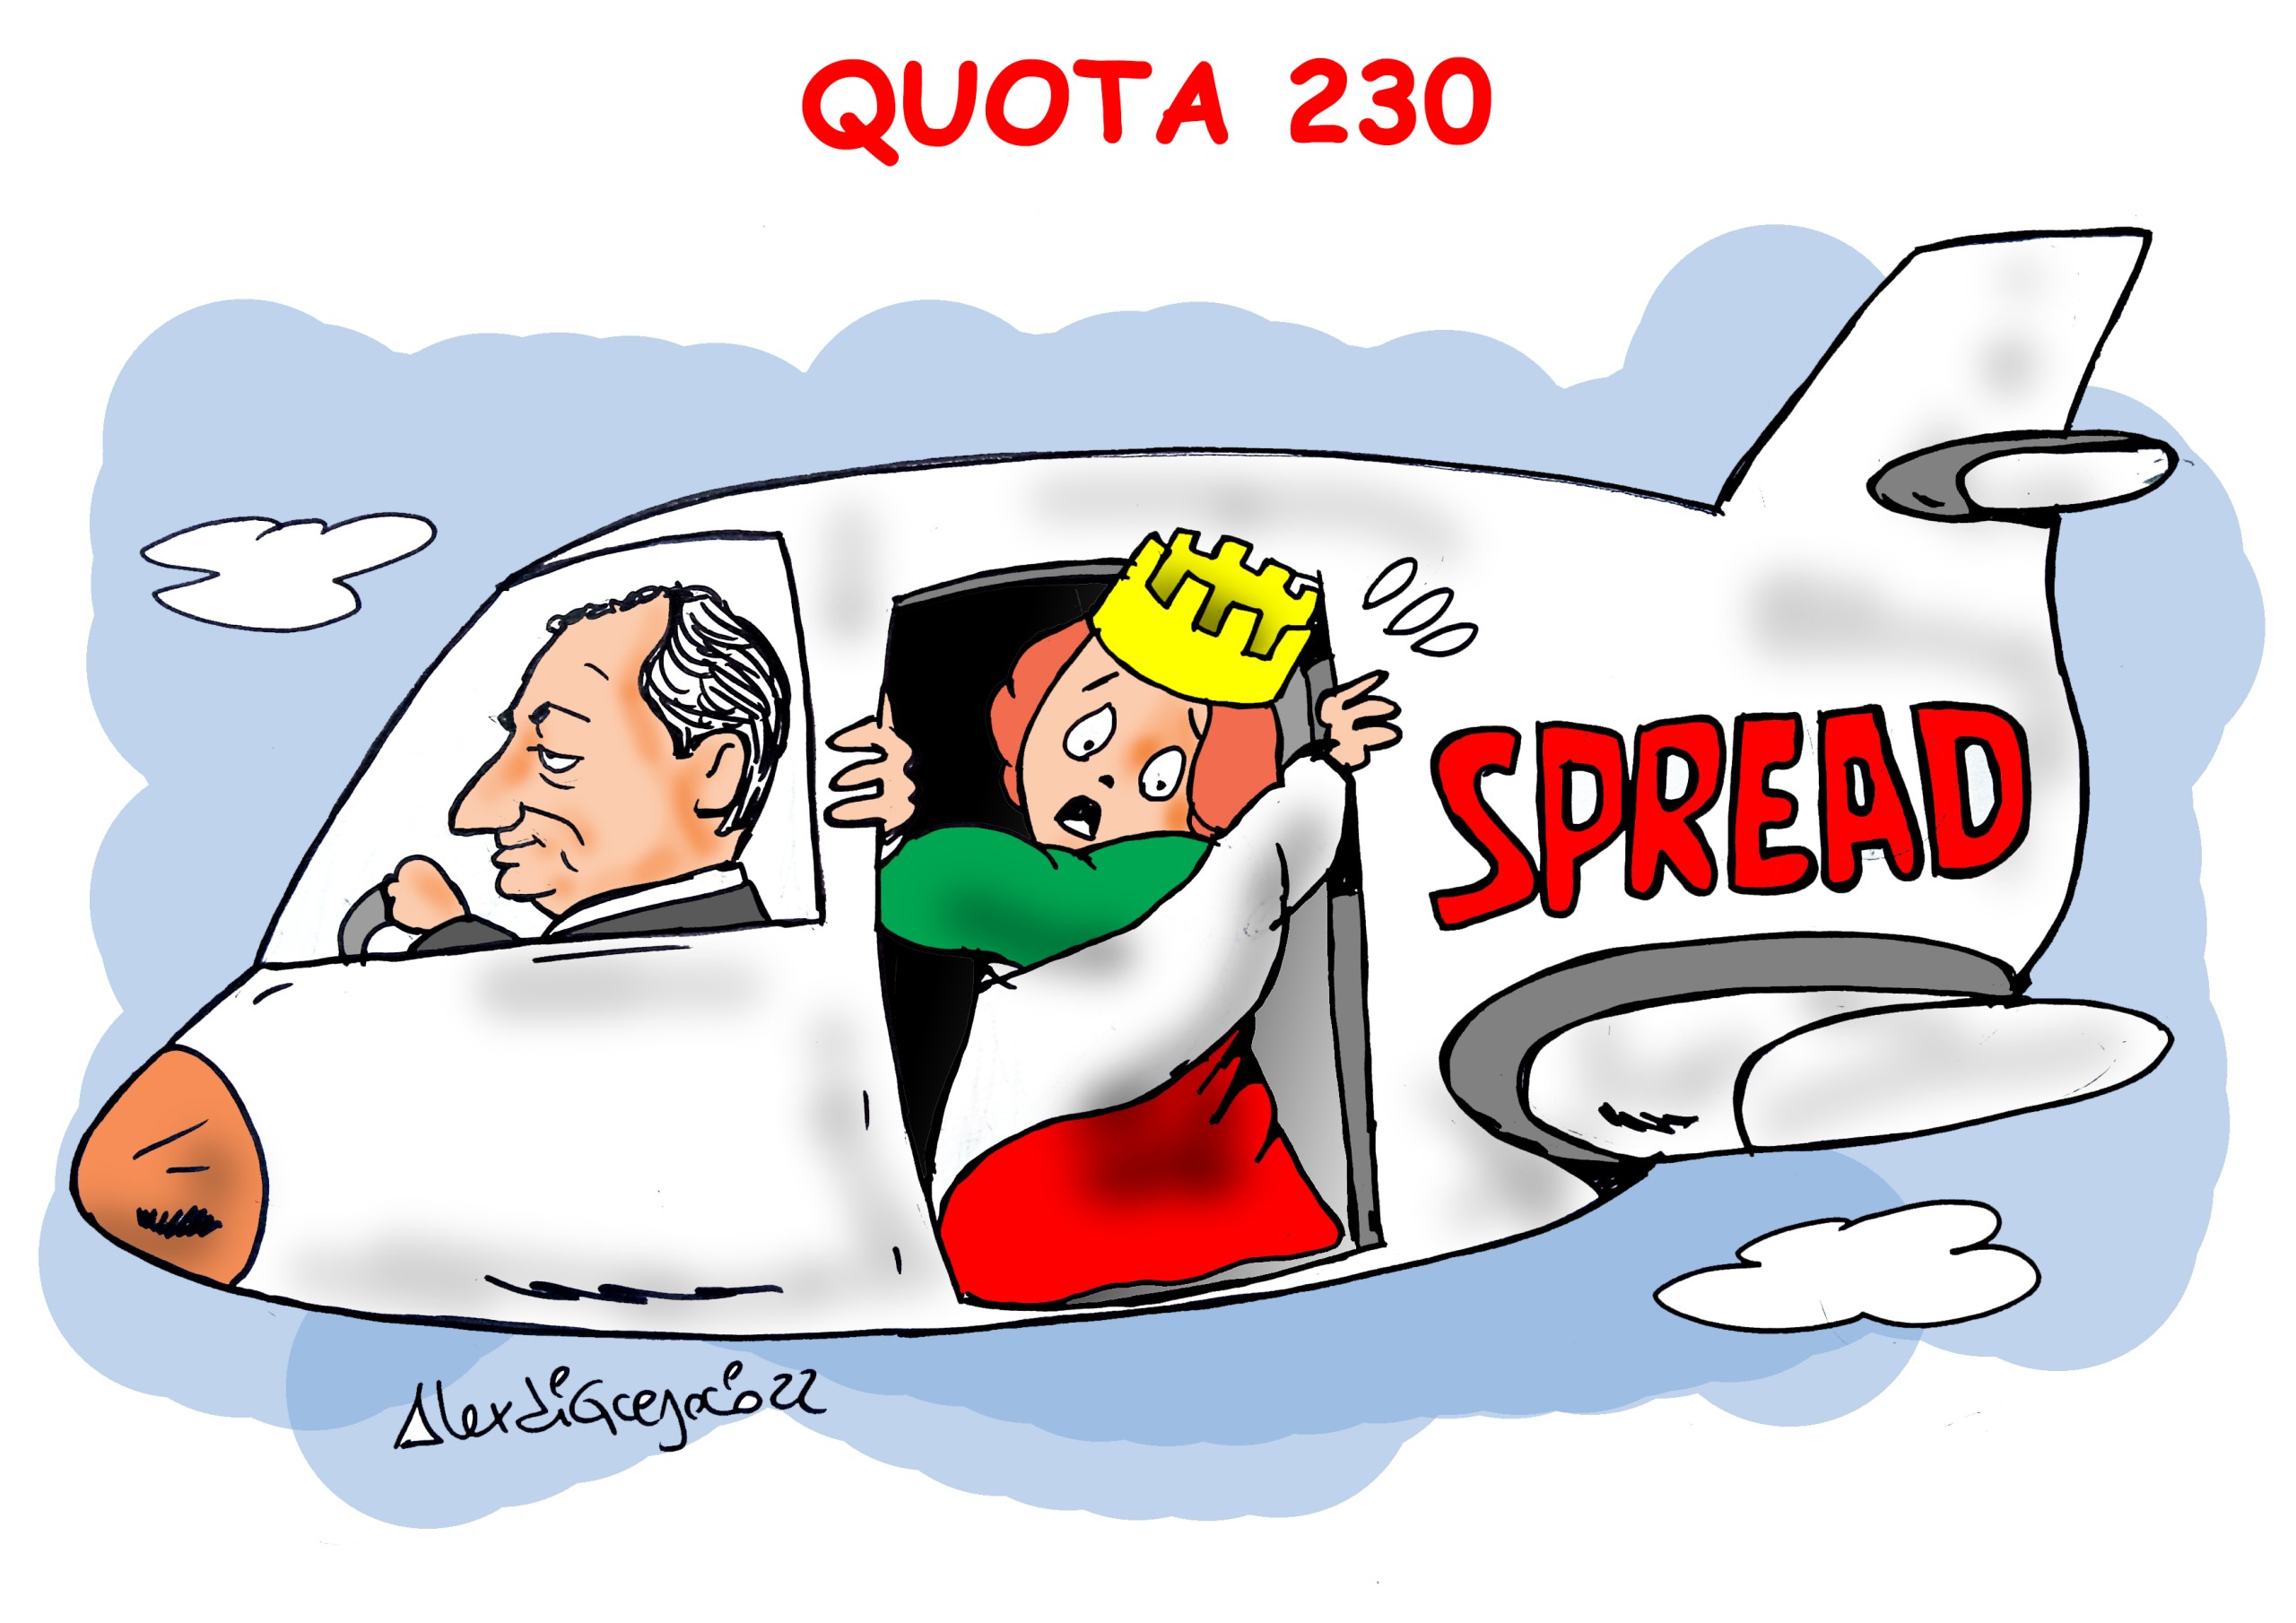 Spread a quota 230